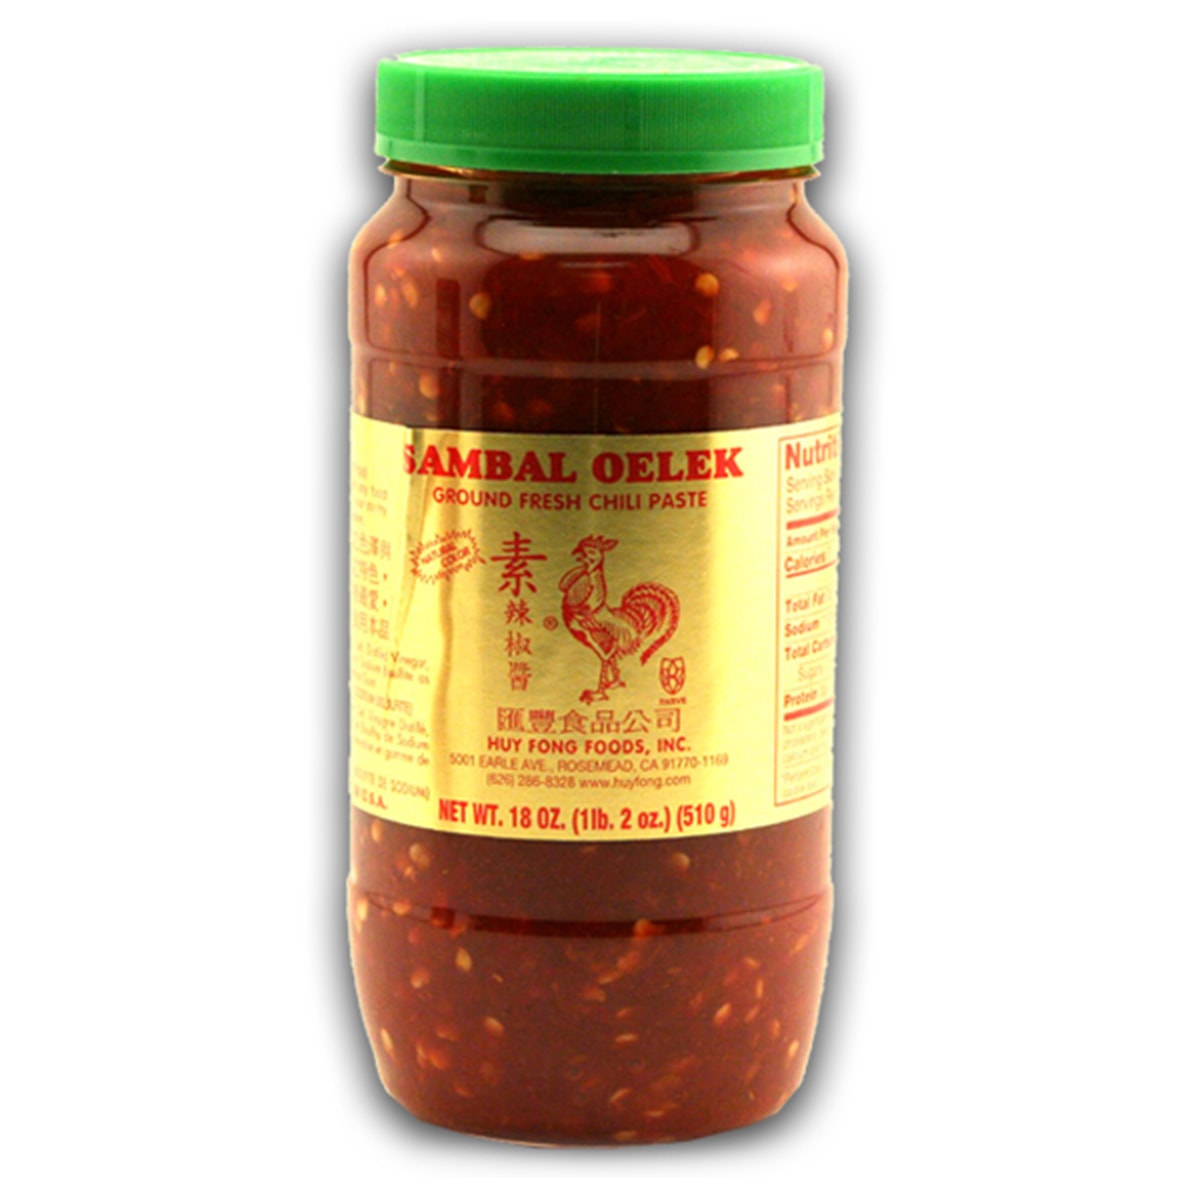 Buy Huy Fong Foods Sambal Oelek (Ground Fresh Chili Paste) - 510 gm